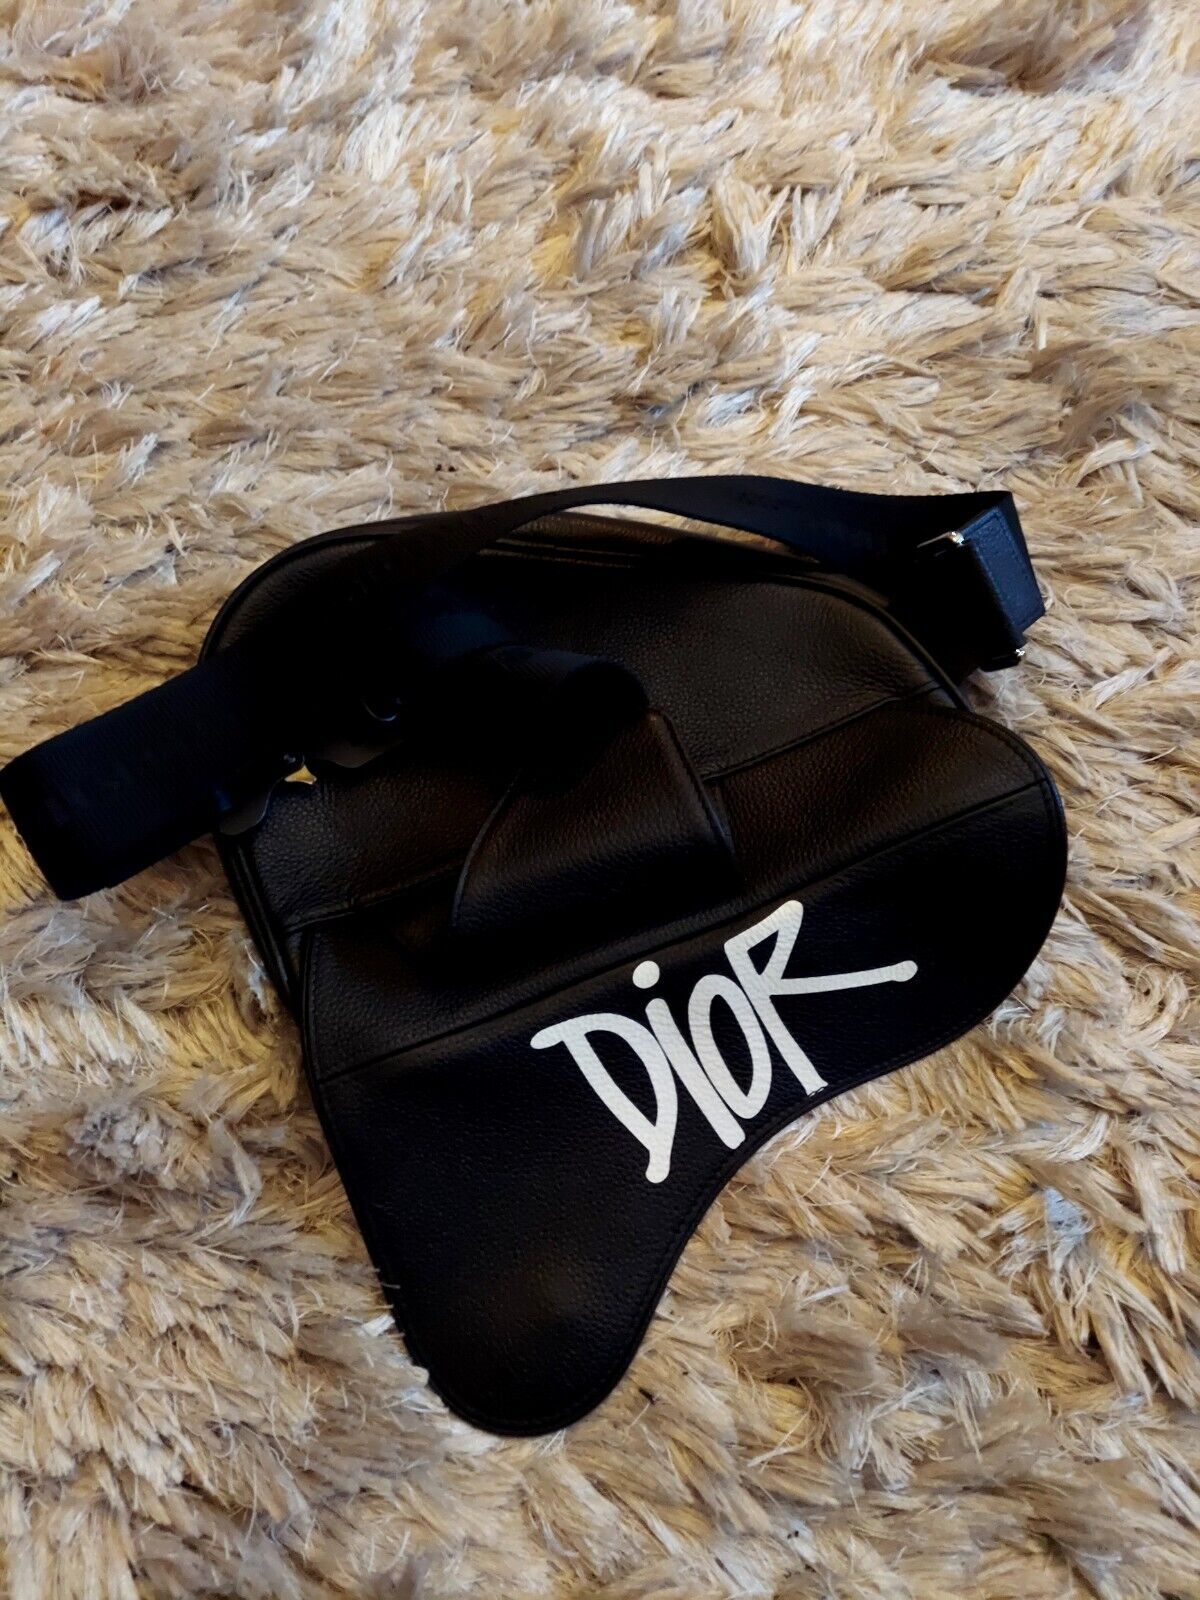 Christian Dior Saddle Bag, Black Leather - image 3